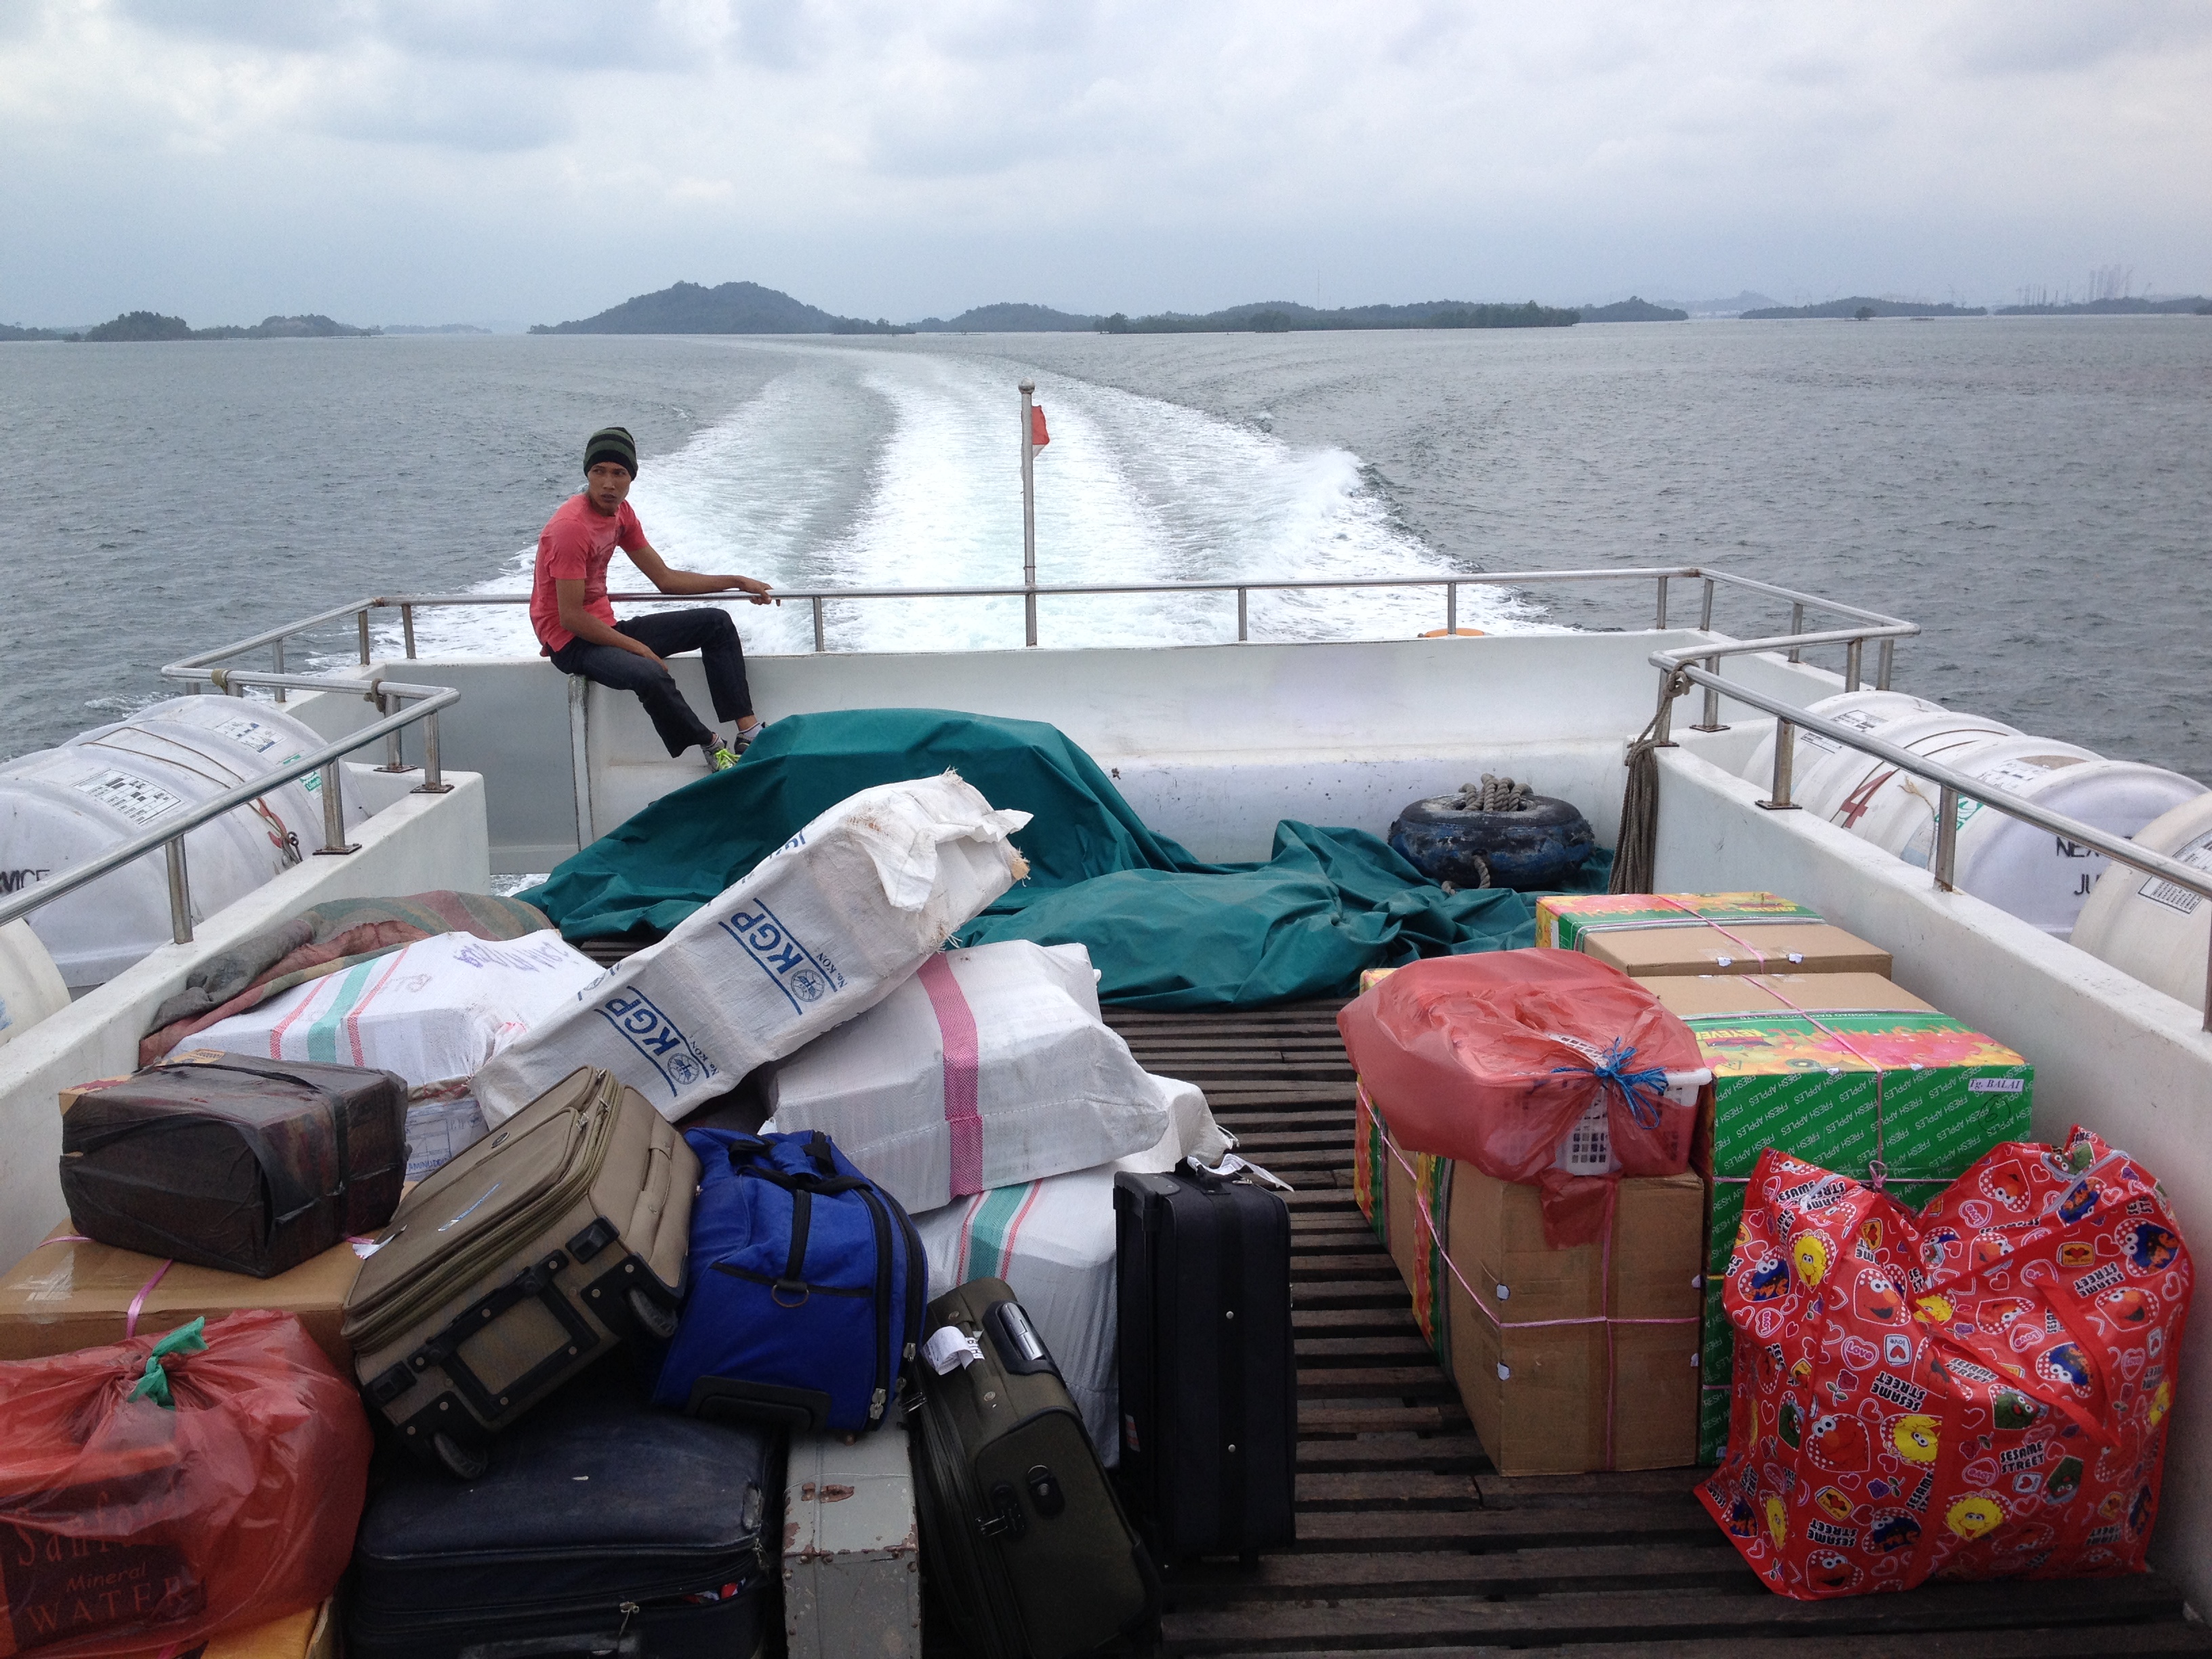 Hour-long ferry ride from Batam to Tanjung Balai Karimun, Indonesia (2014)